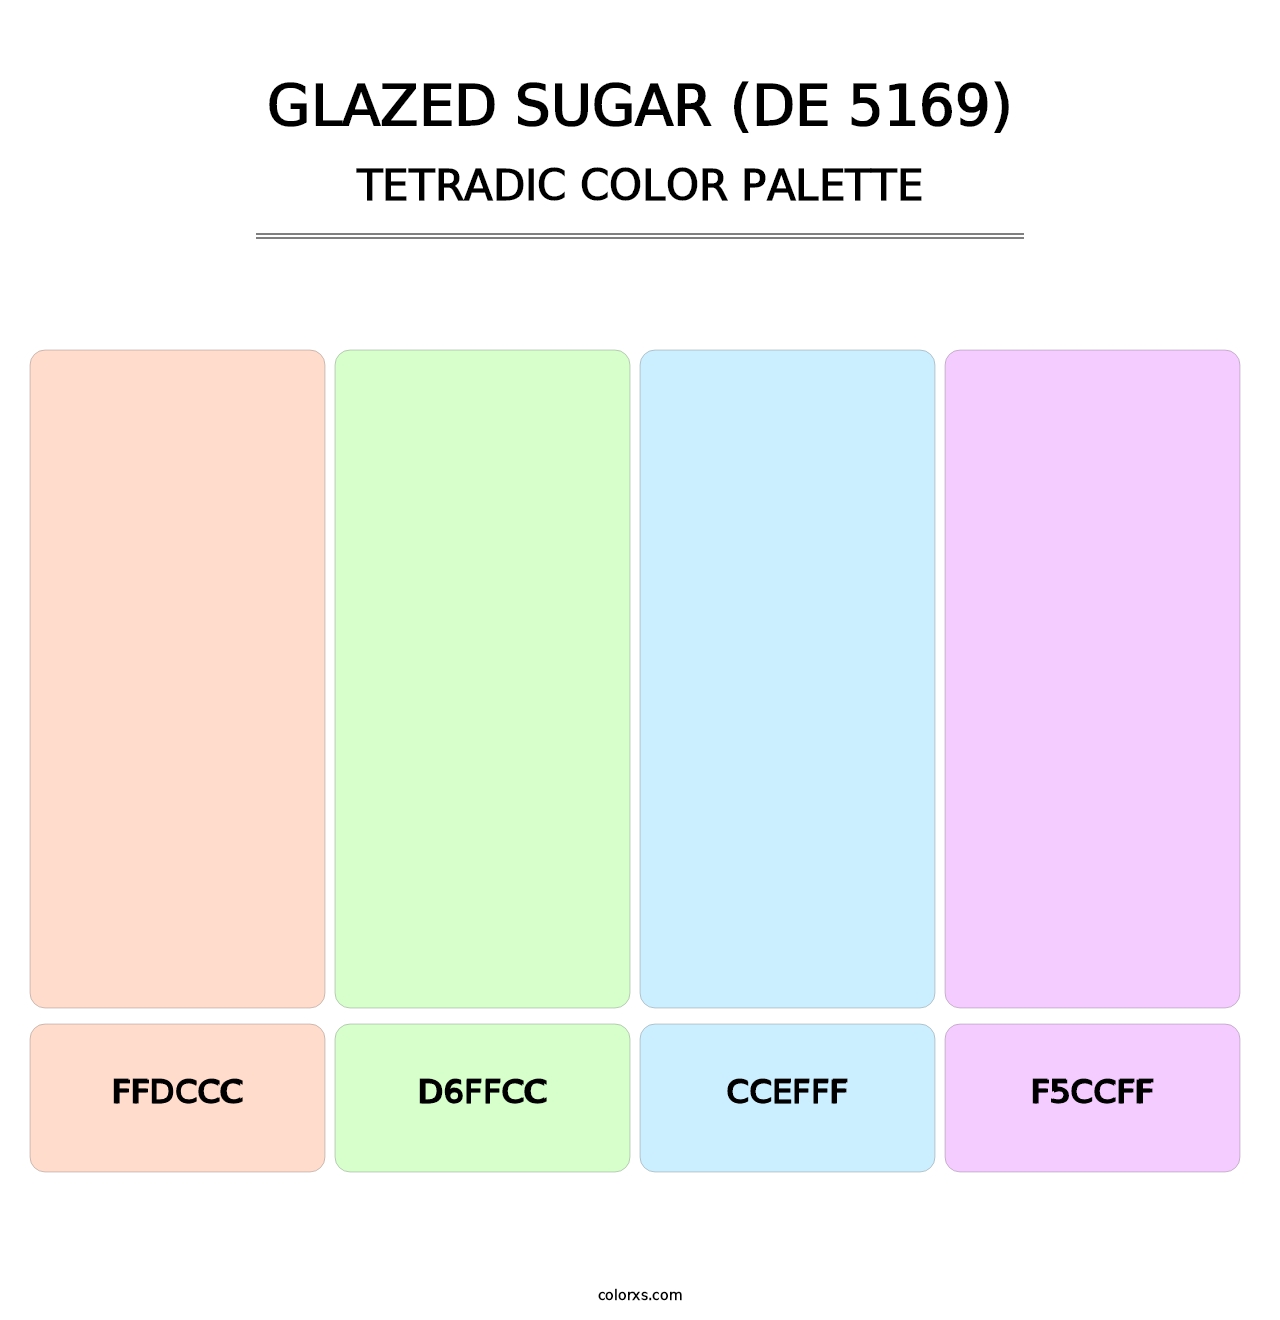 Glazed Sugar (DE 5169) - Tetradic Color Palette